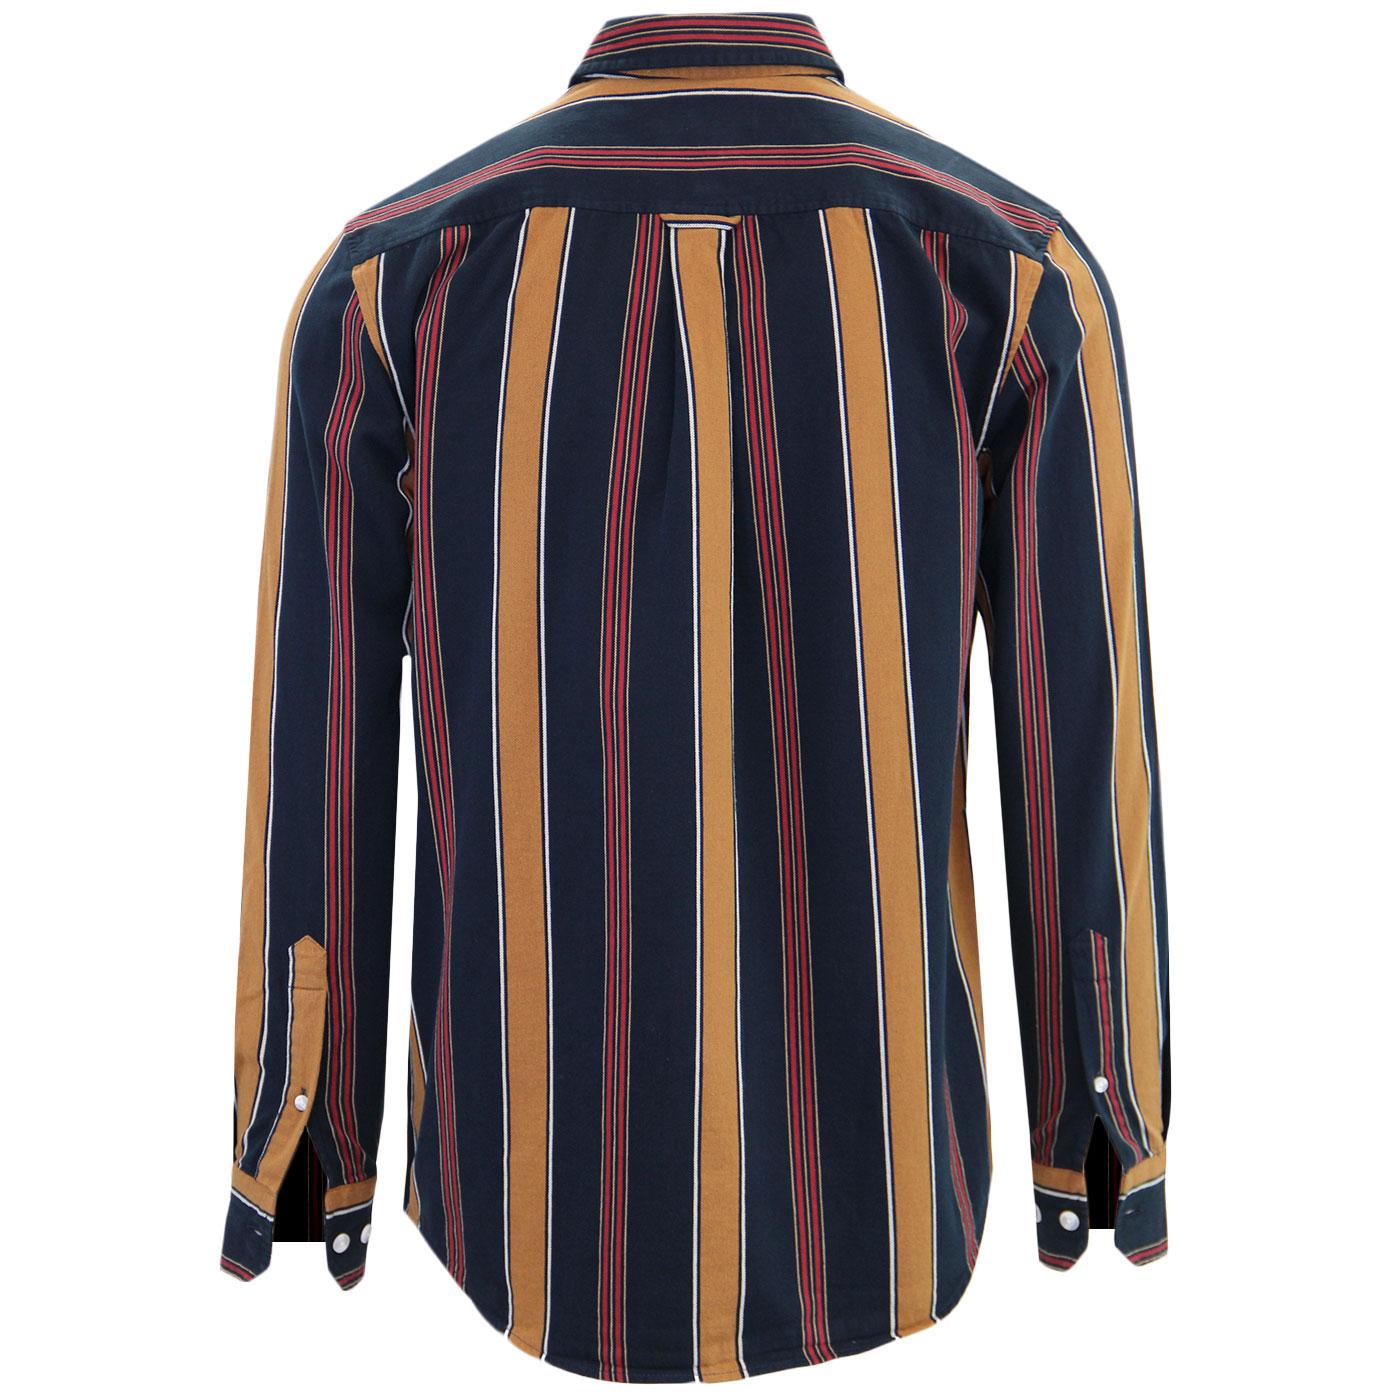 FARAH Laird Retro 60s Mod Stripe Oxford Shirt in True Navy